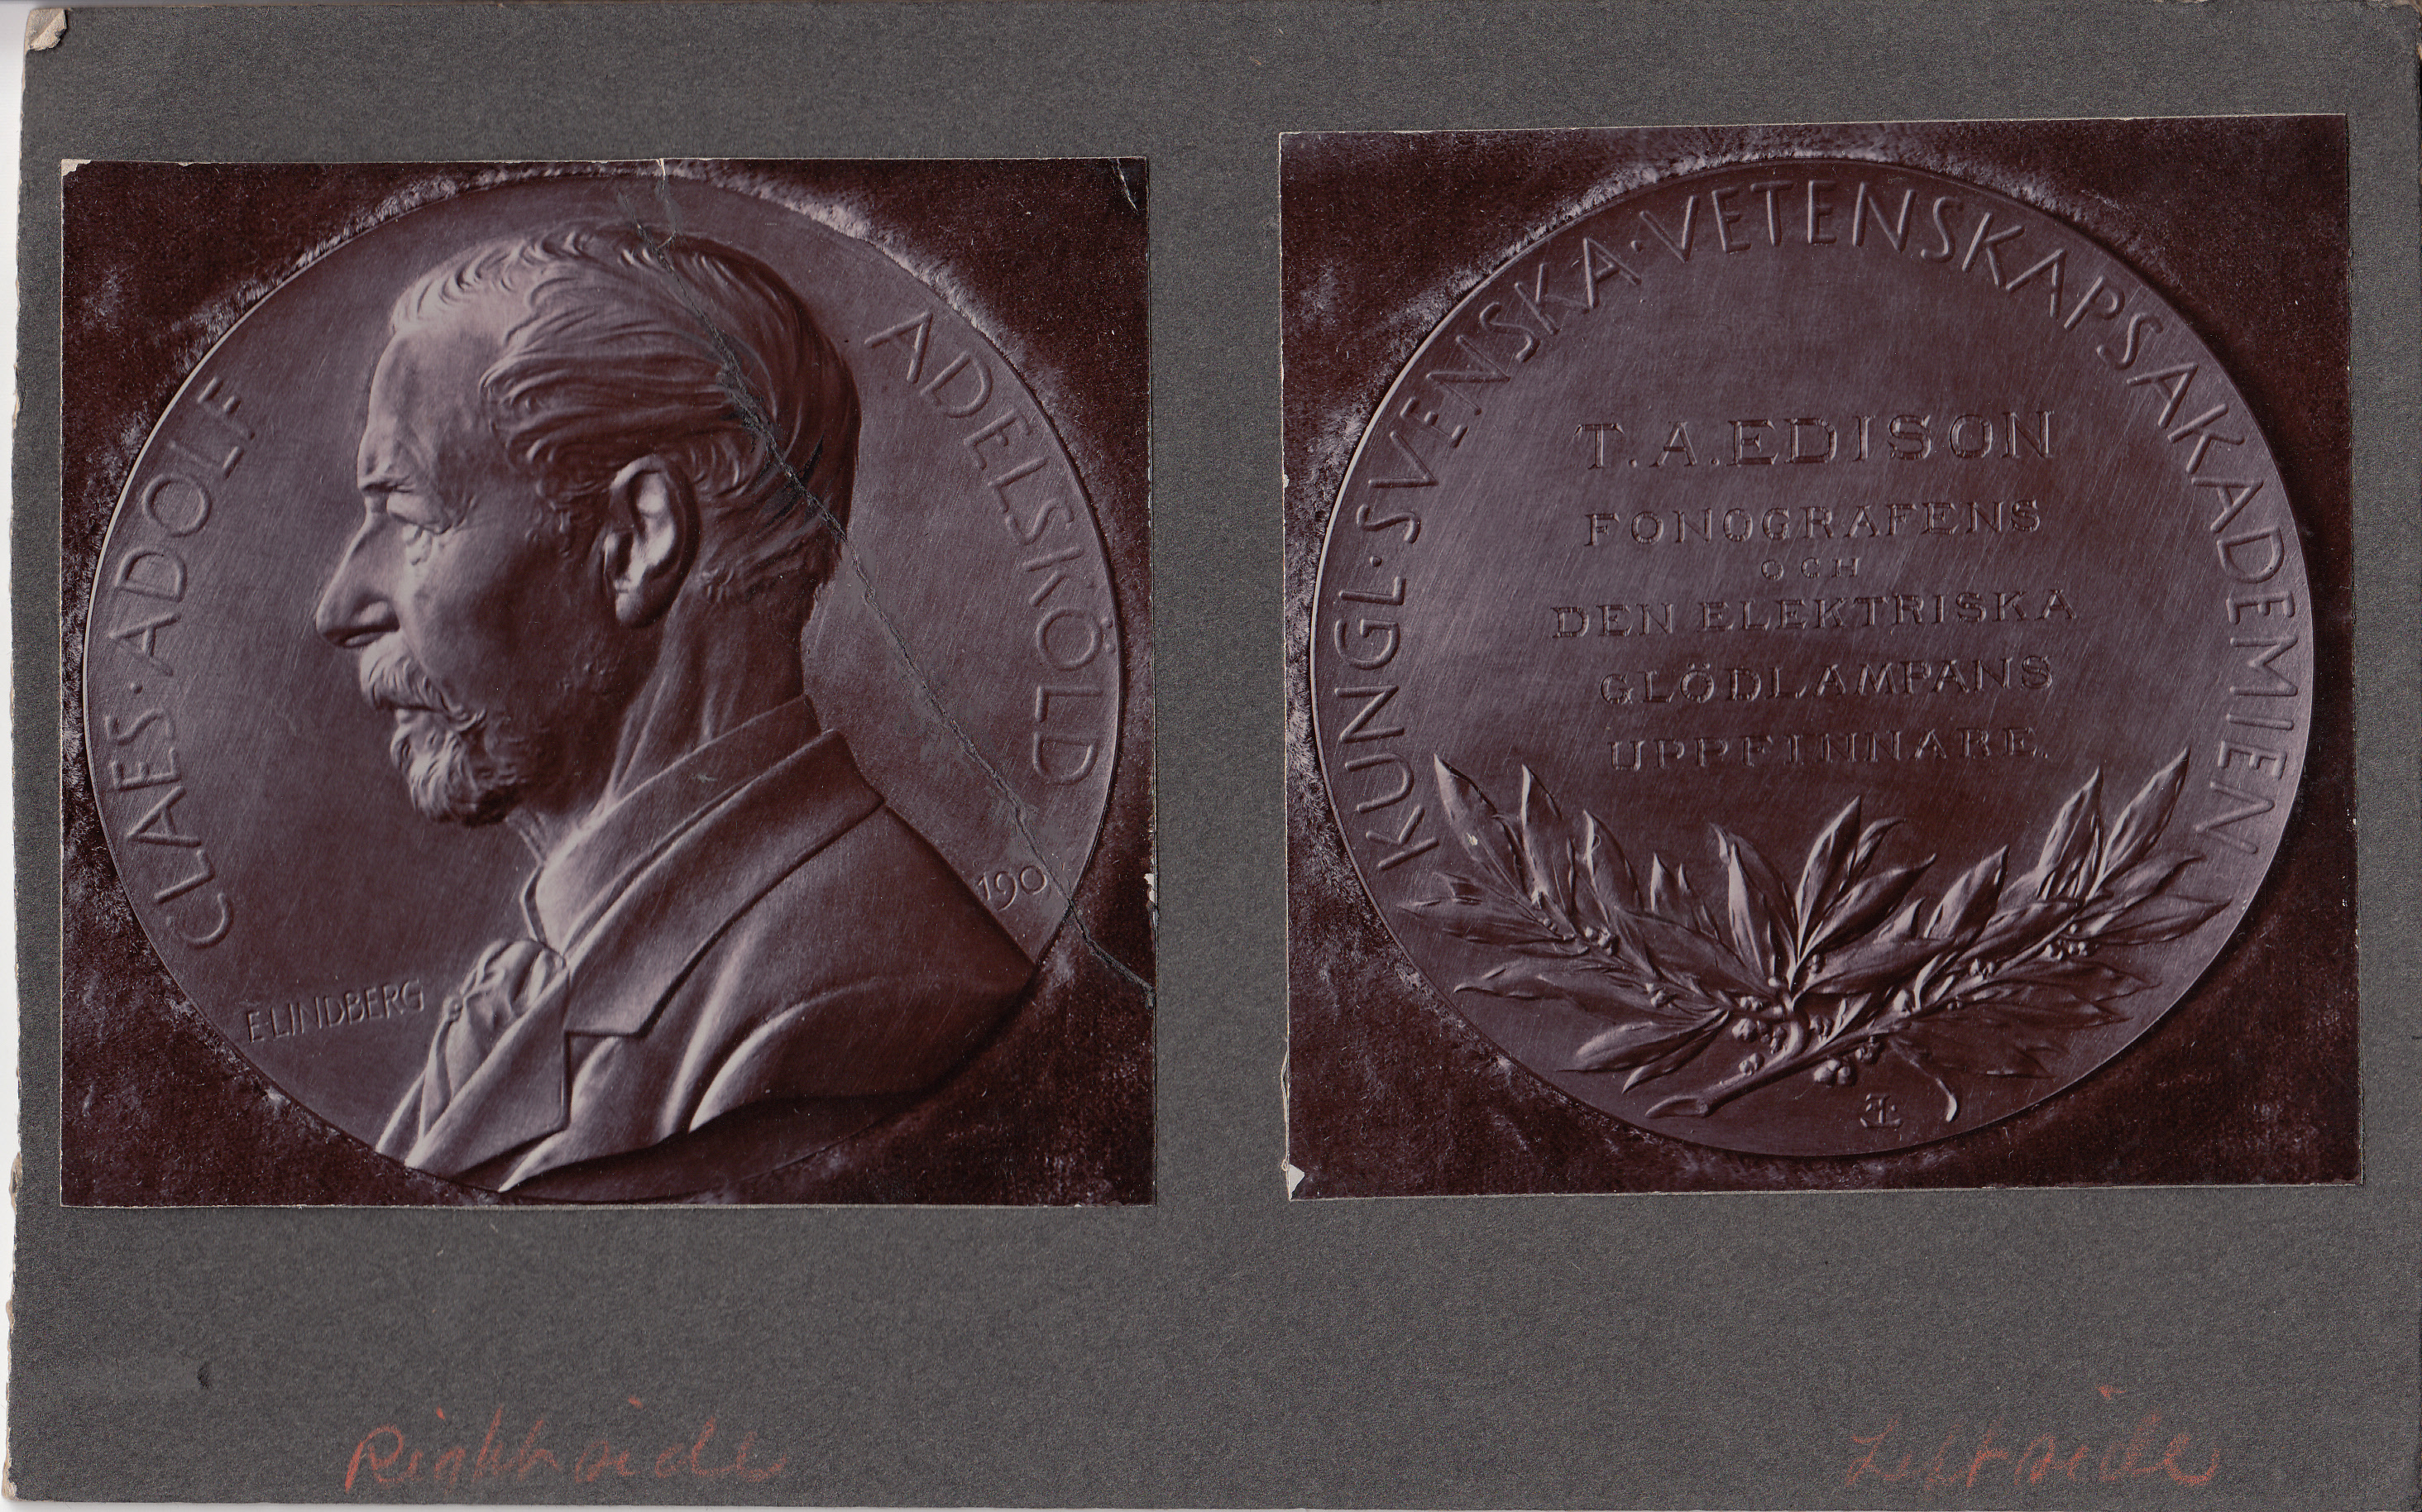 Swedish medal given to Thomas Edison for his Phonograph, two views.